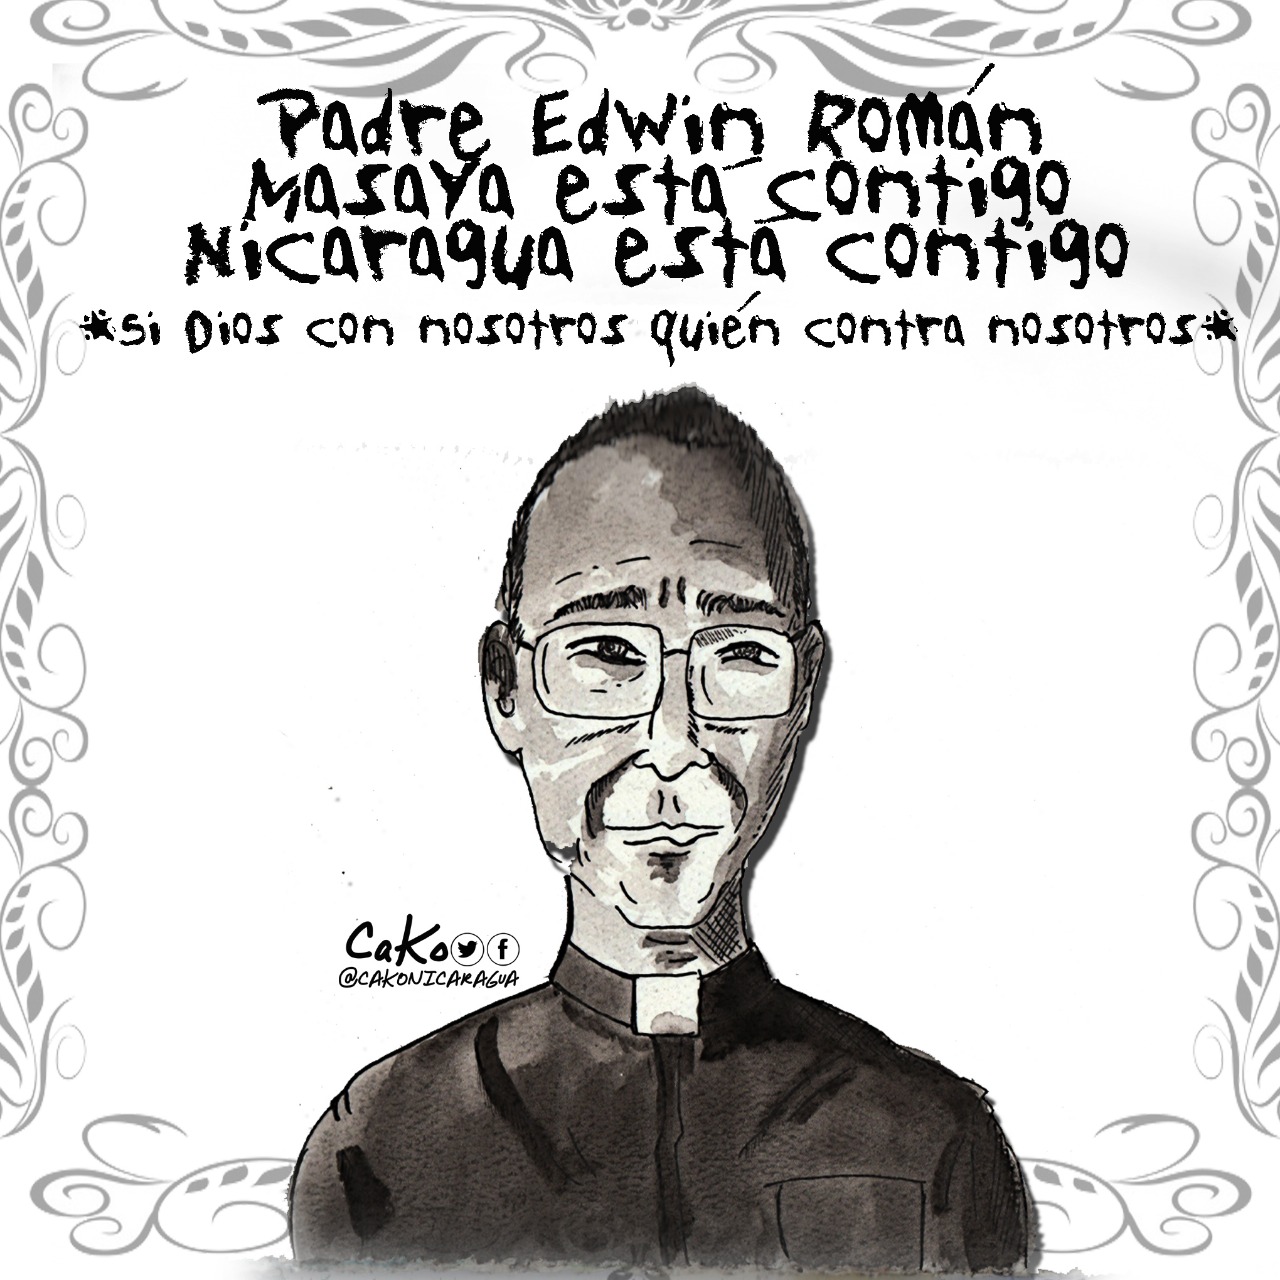 La Caricatura: Feliz Cumpleaños Padre Edwing